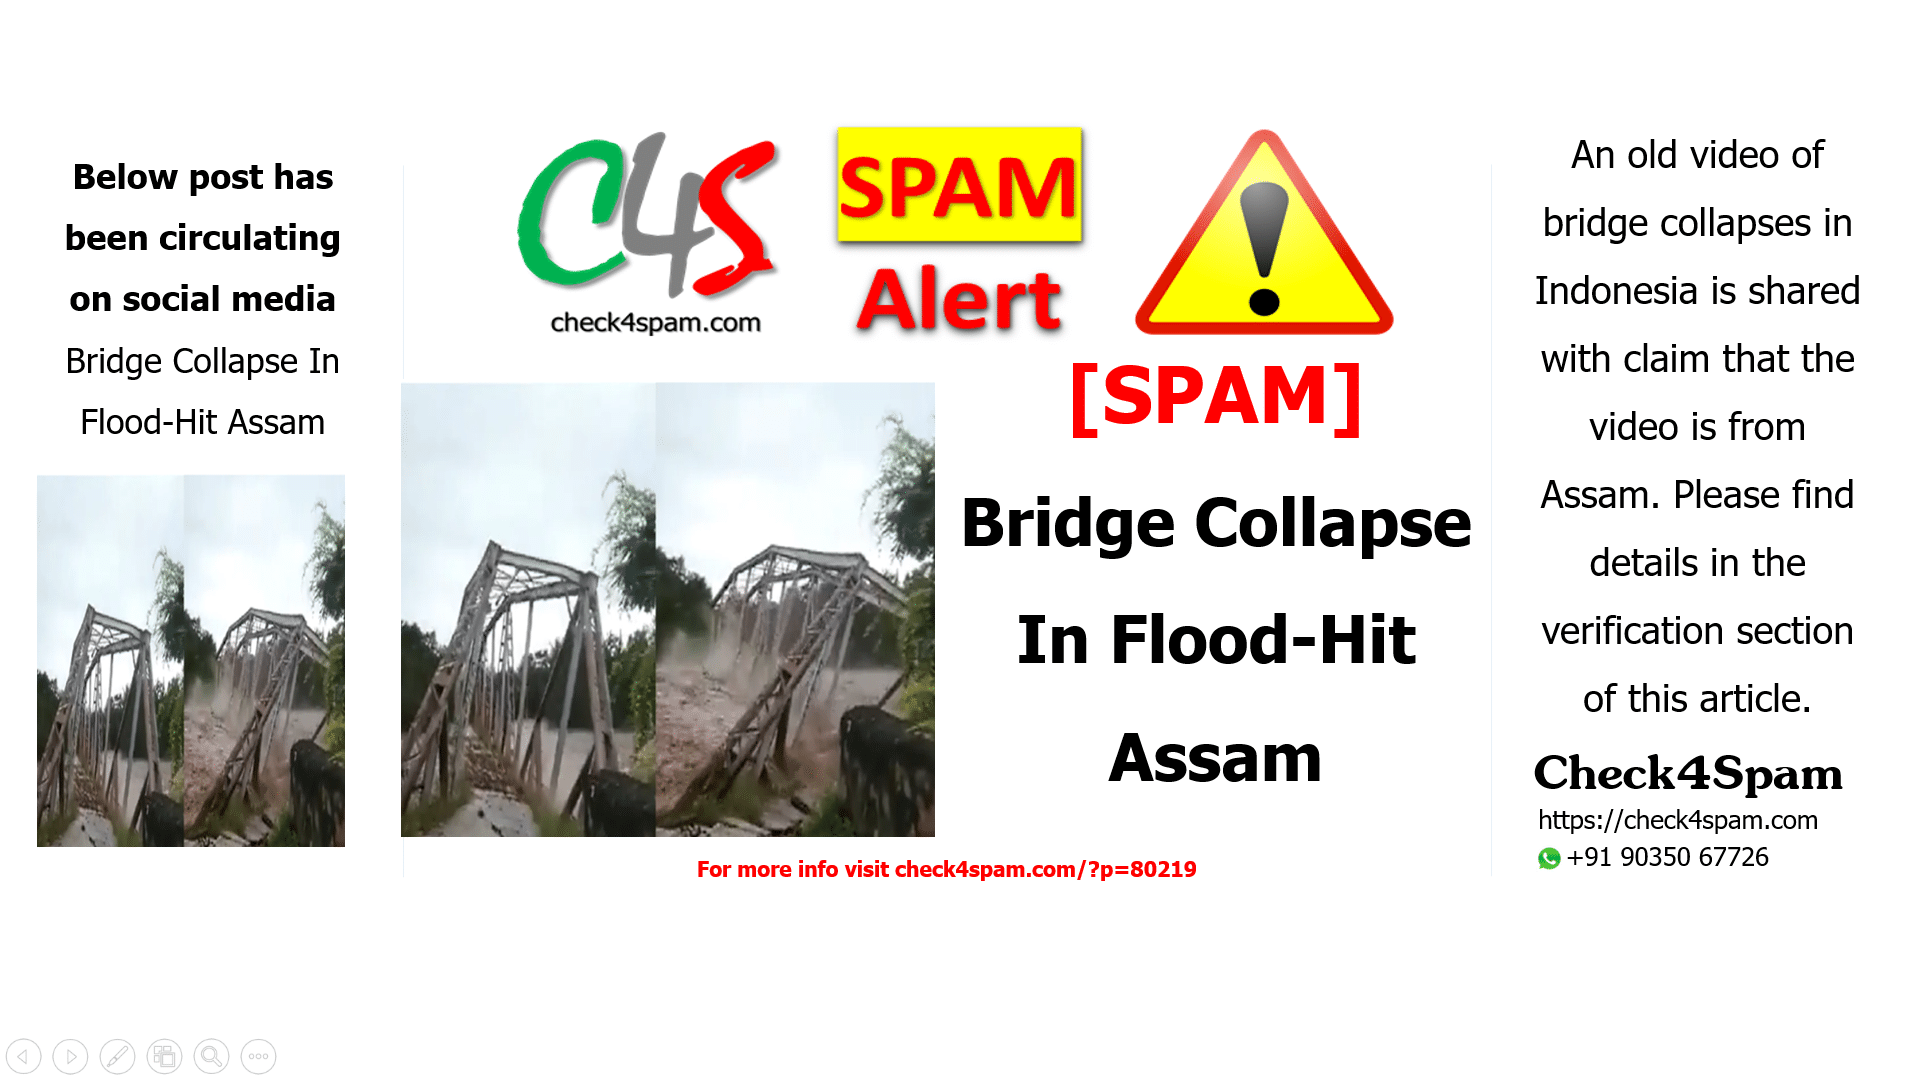 Bridge Collapse In Flood-Hit Assam